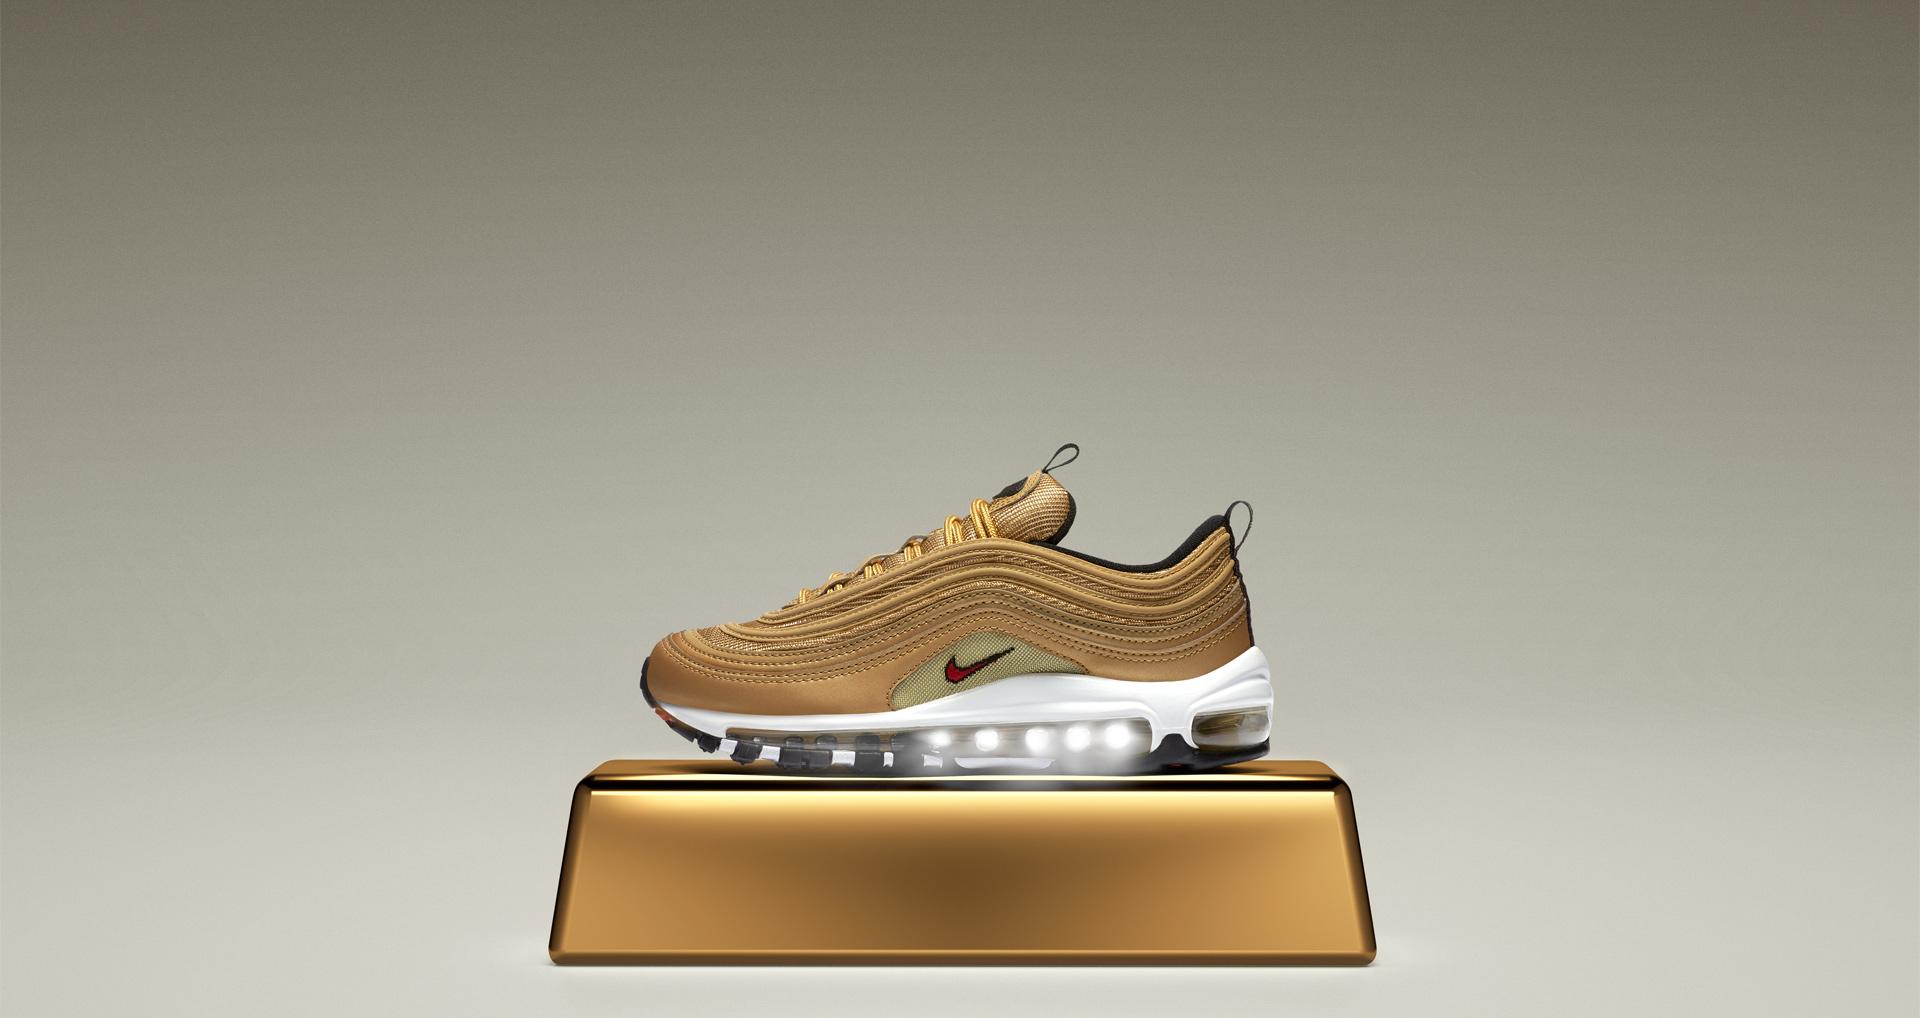 Nike Air Max 97 QS Metallic Gold 918890 700. Available